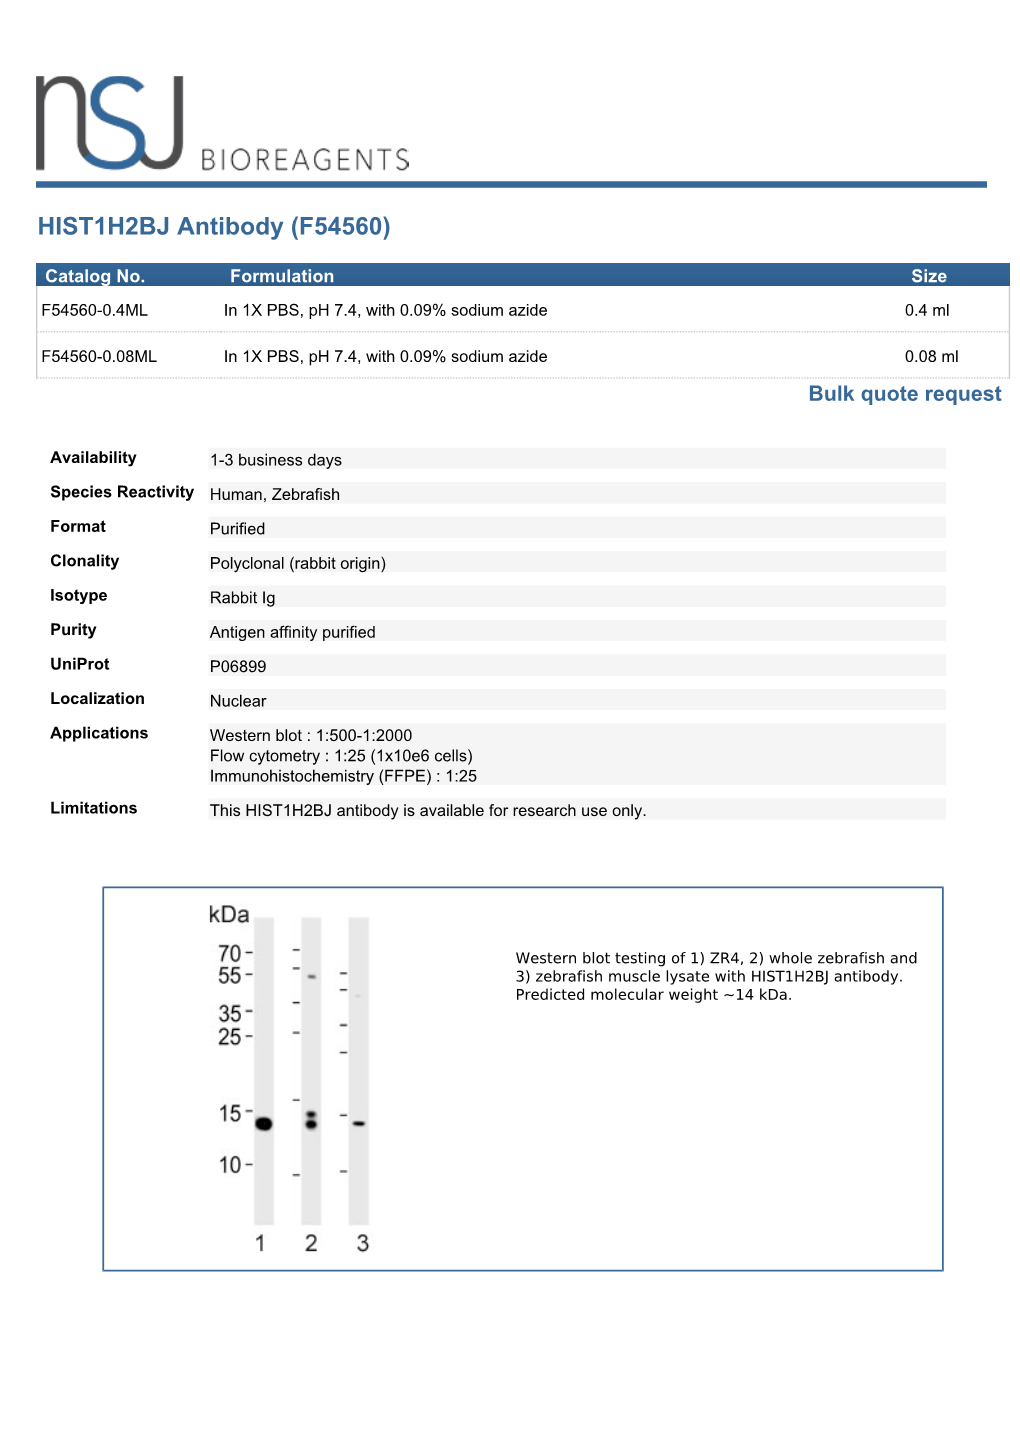 HIST1H2BJ Antibody (F54560)